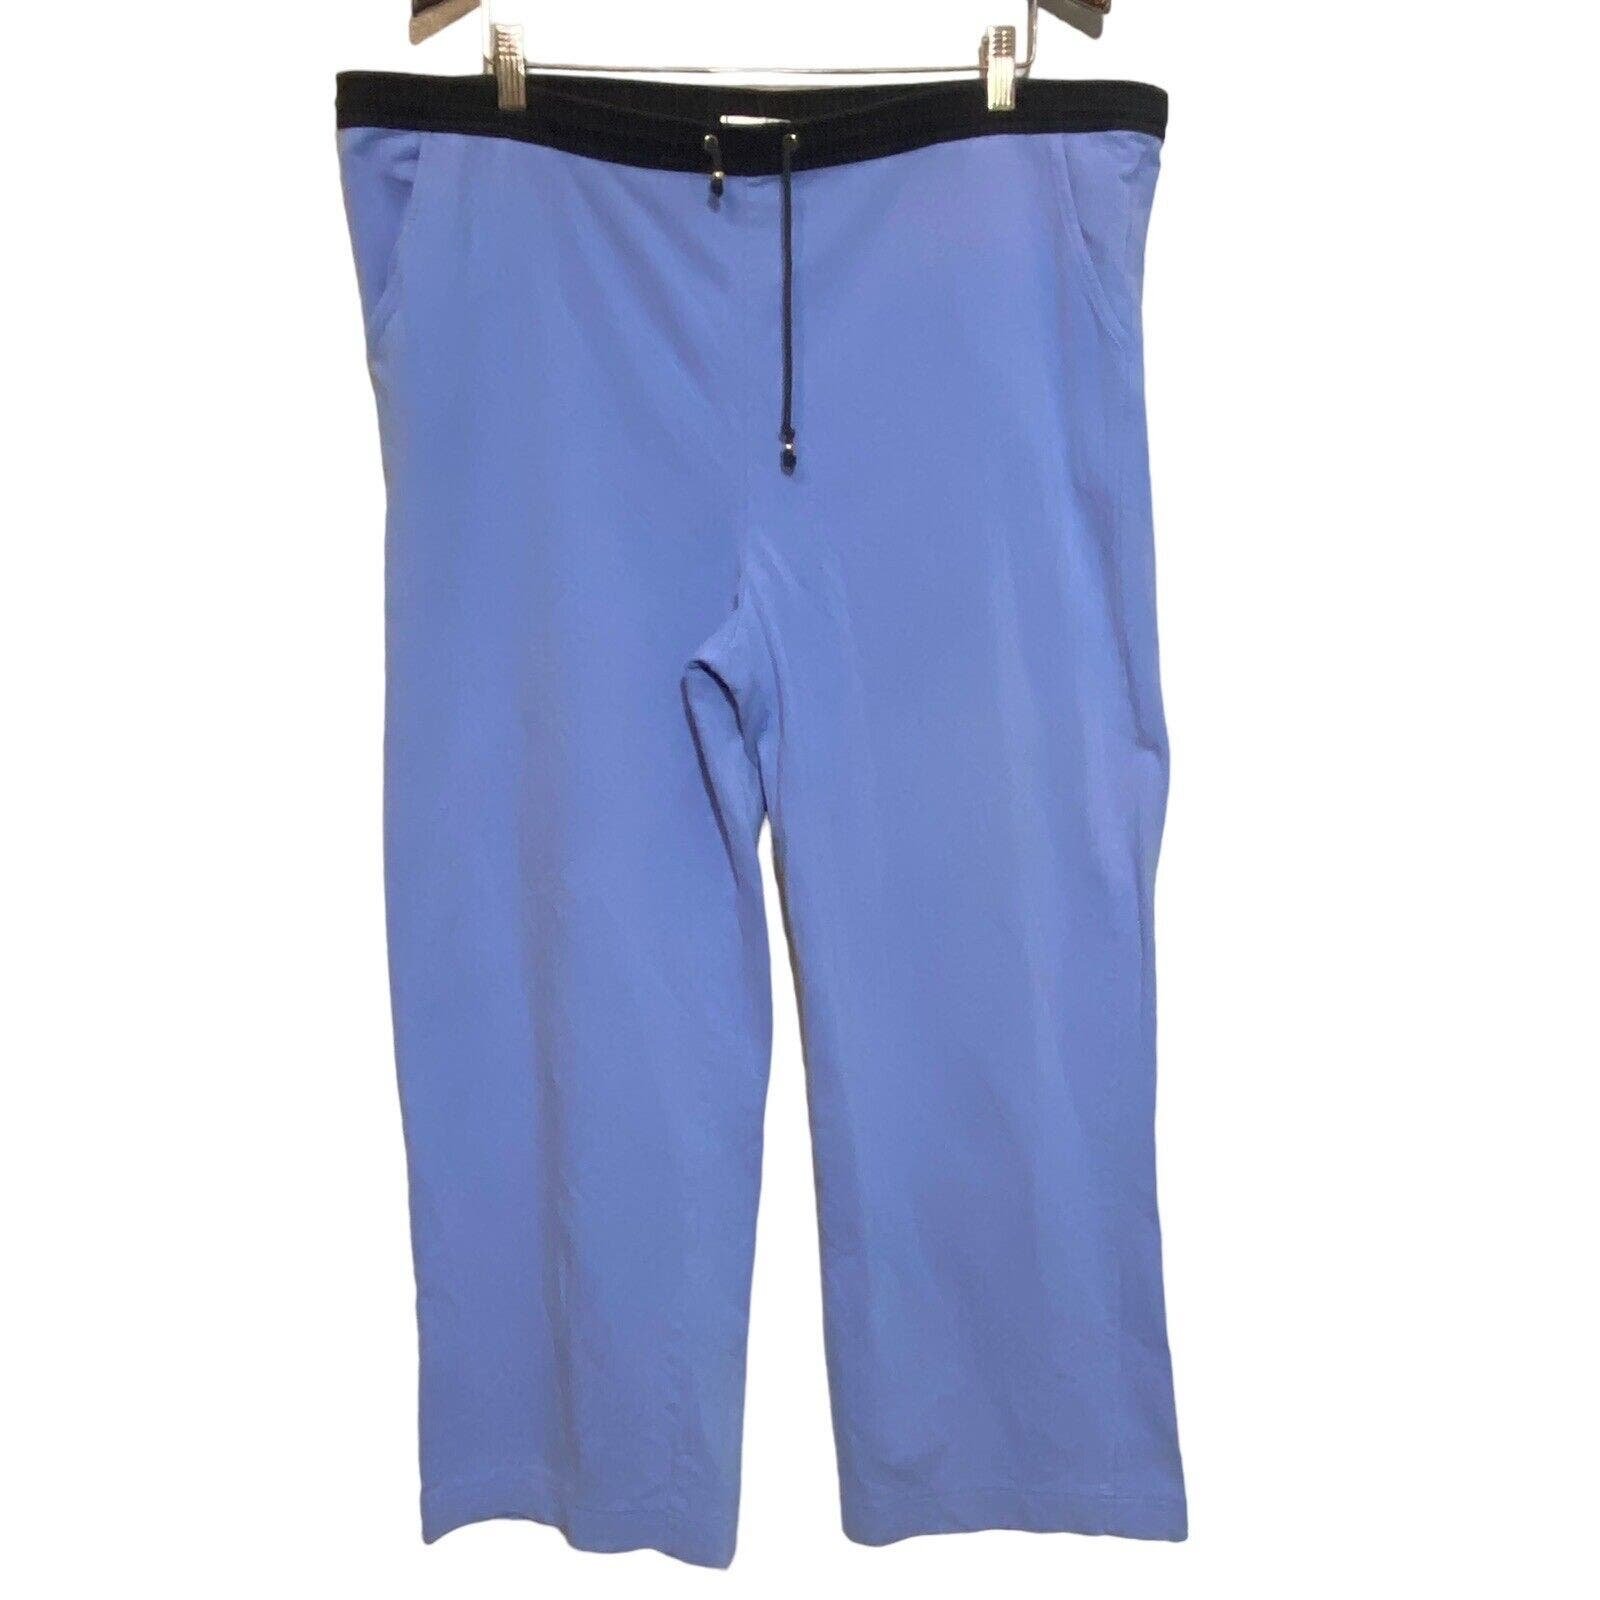 Buy ST JOHN SPORT by Marie Gray Vintage Blue Knit Track Pants Size Large ogPH8GGjd US Outlet